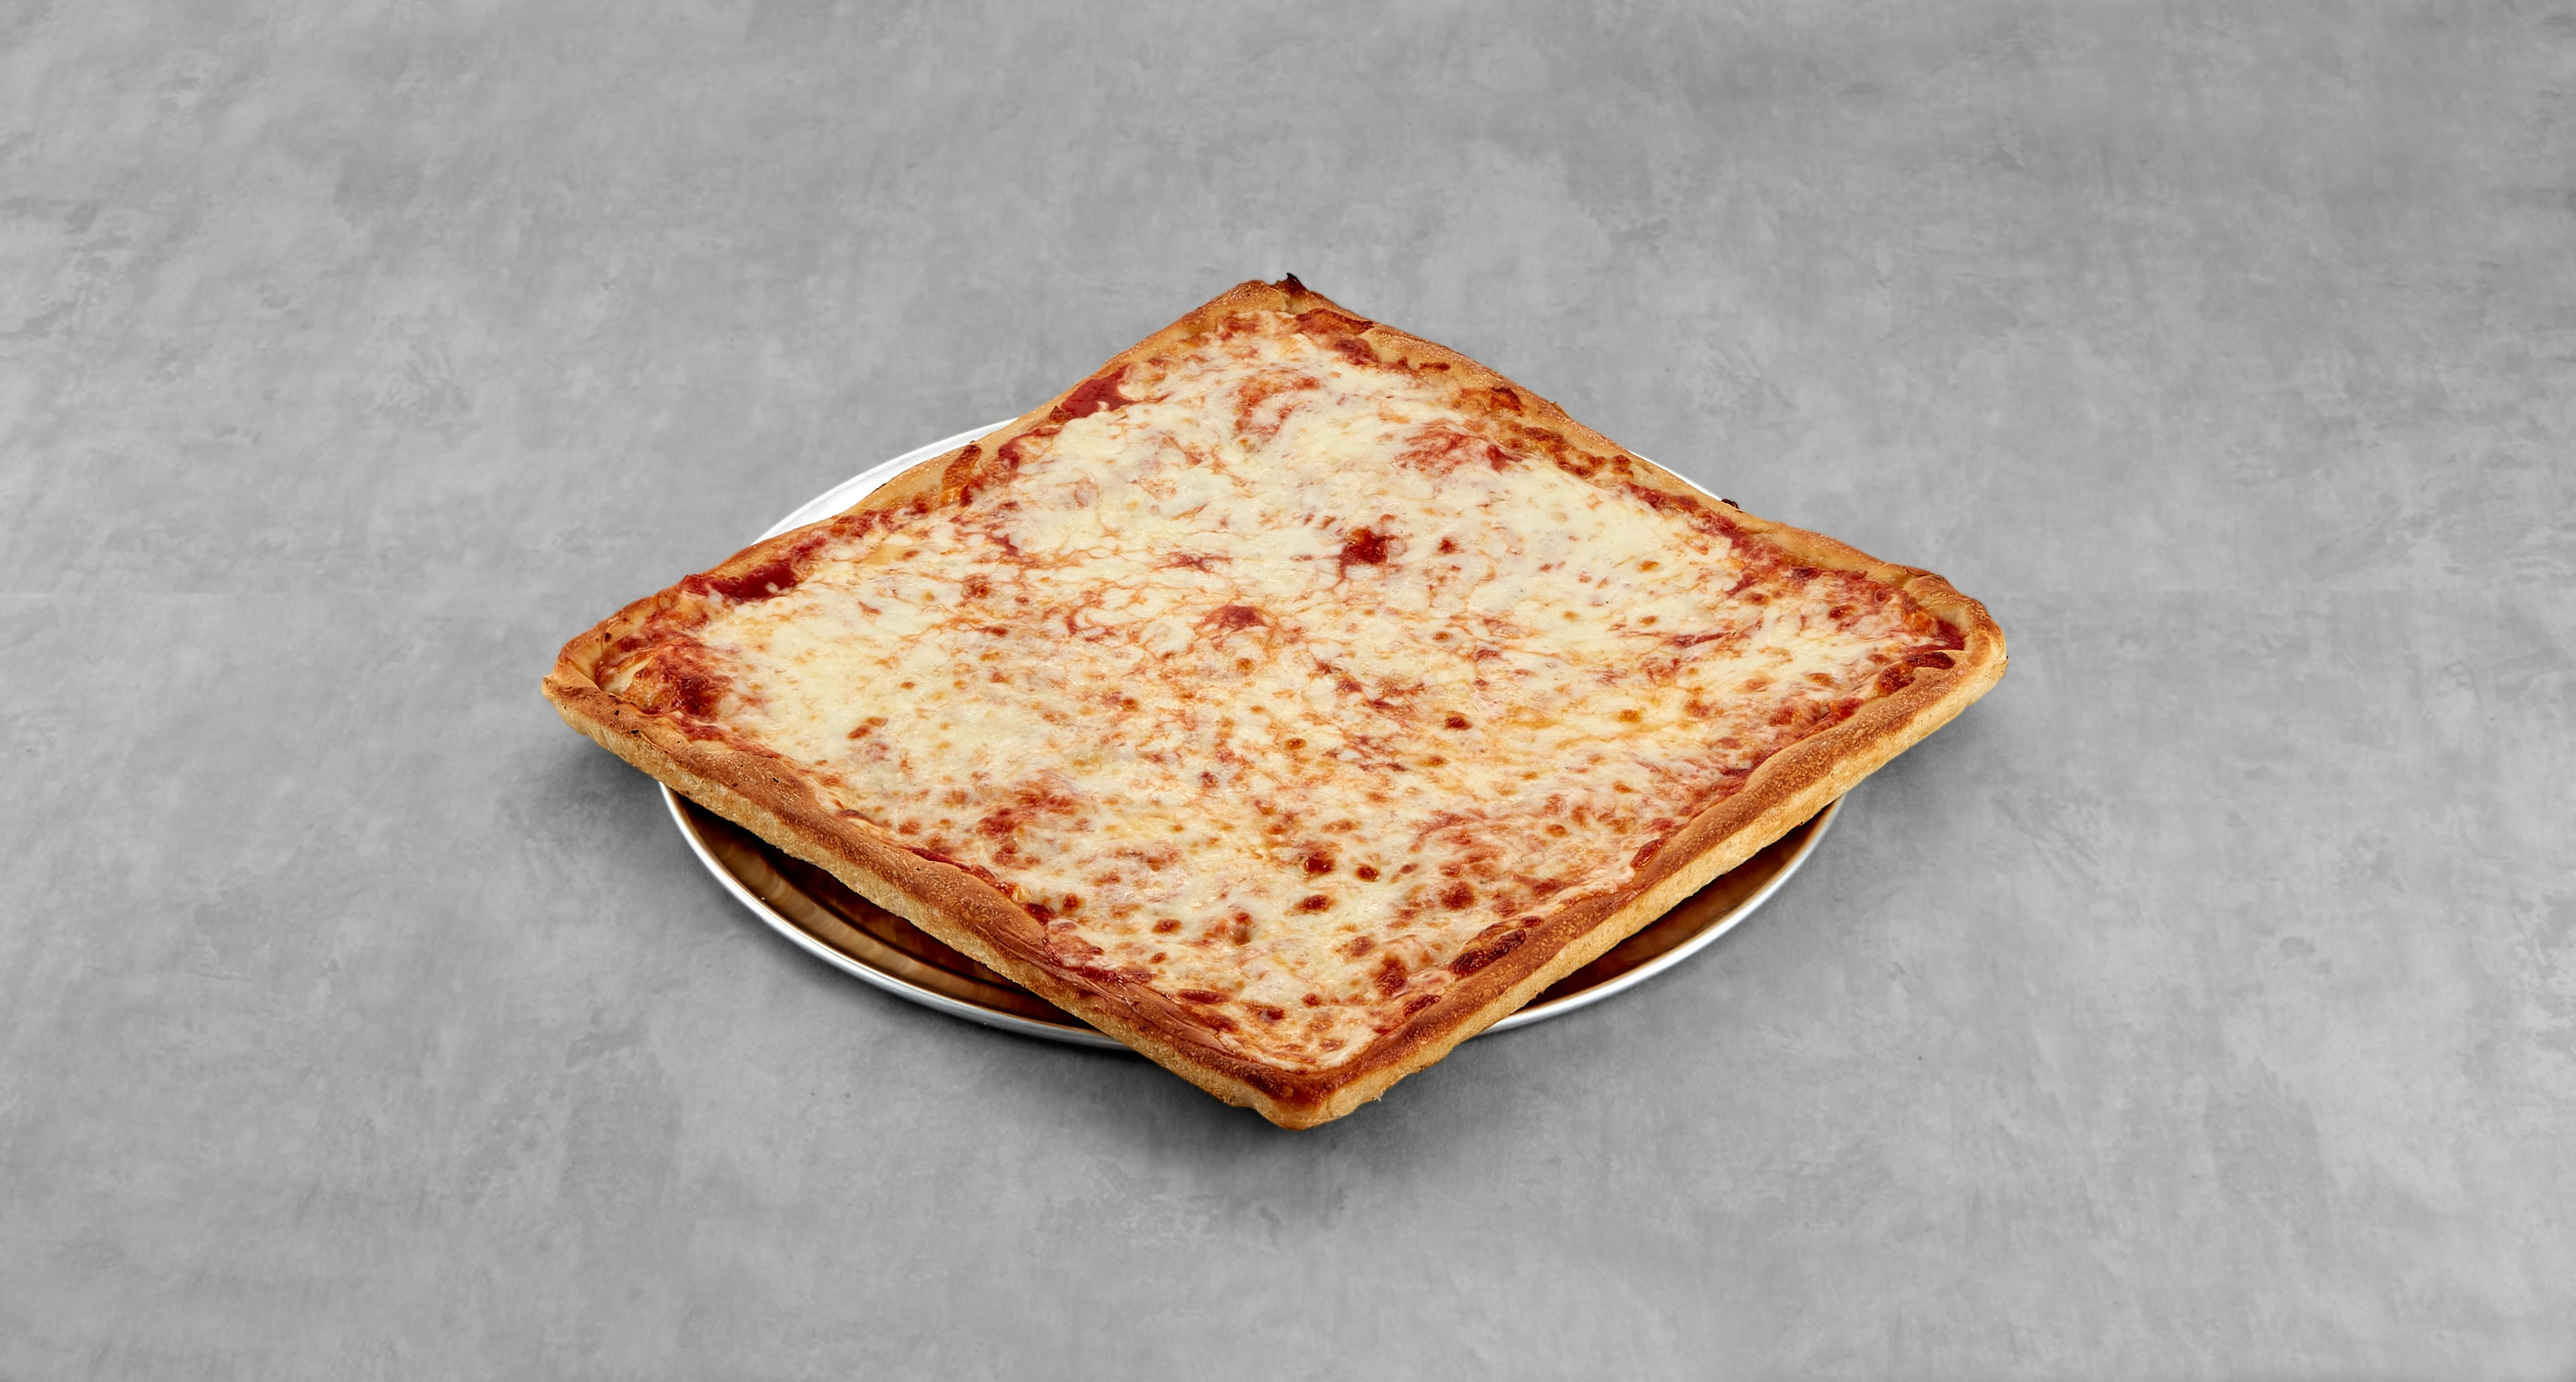 Sicilian Cheese Pizza from Mario's Pizzeria in Seaford, NY